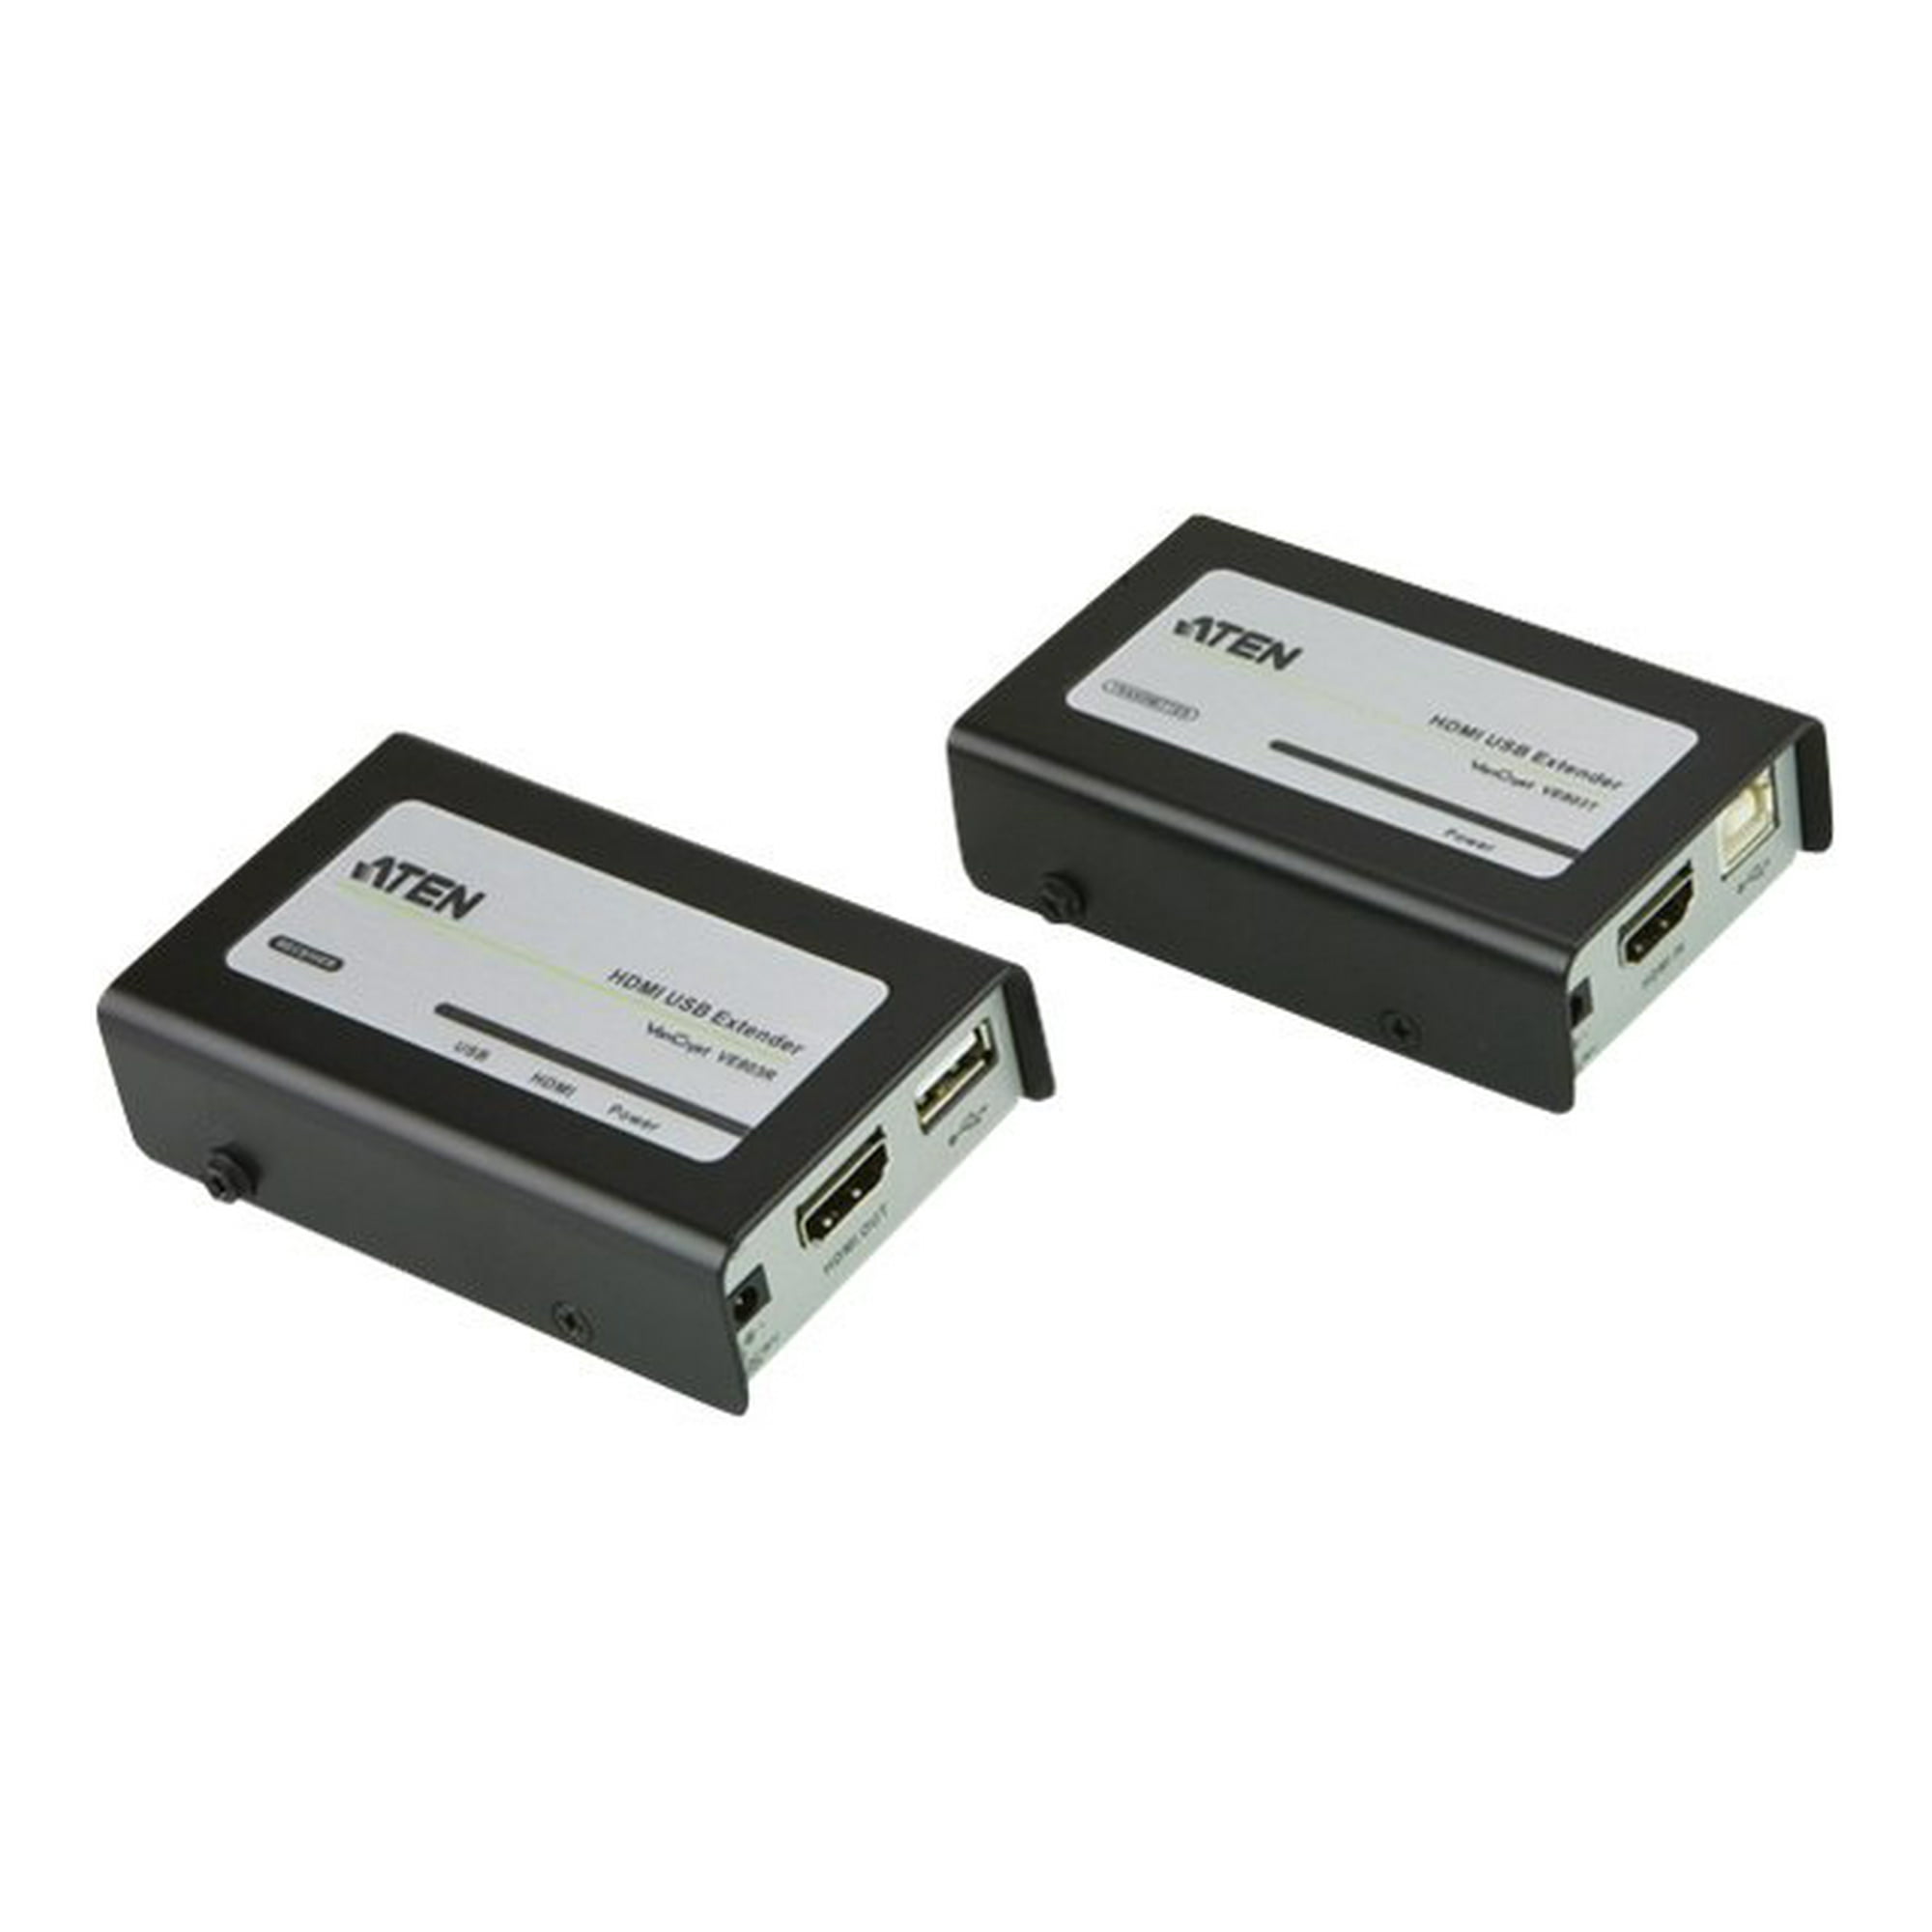 ATEN VE803 HDMI USB Extender - Video/audio/USB extender - up to